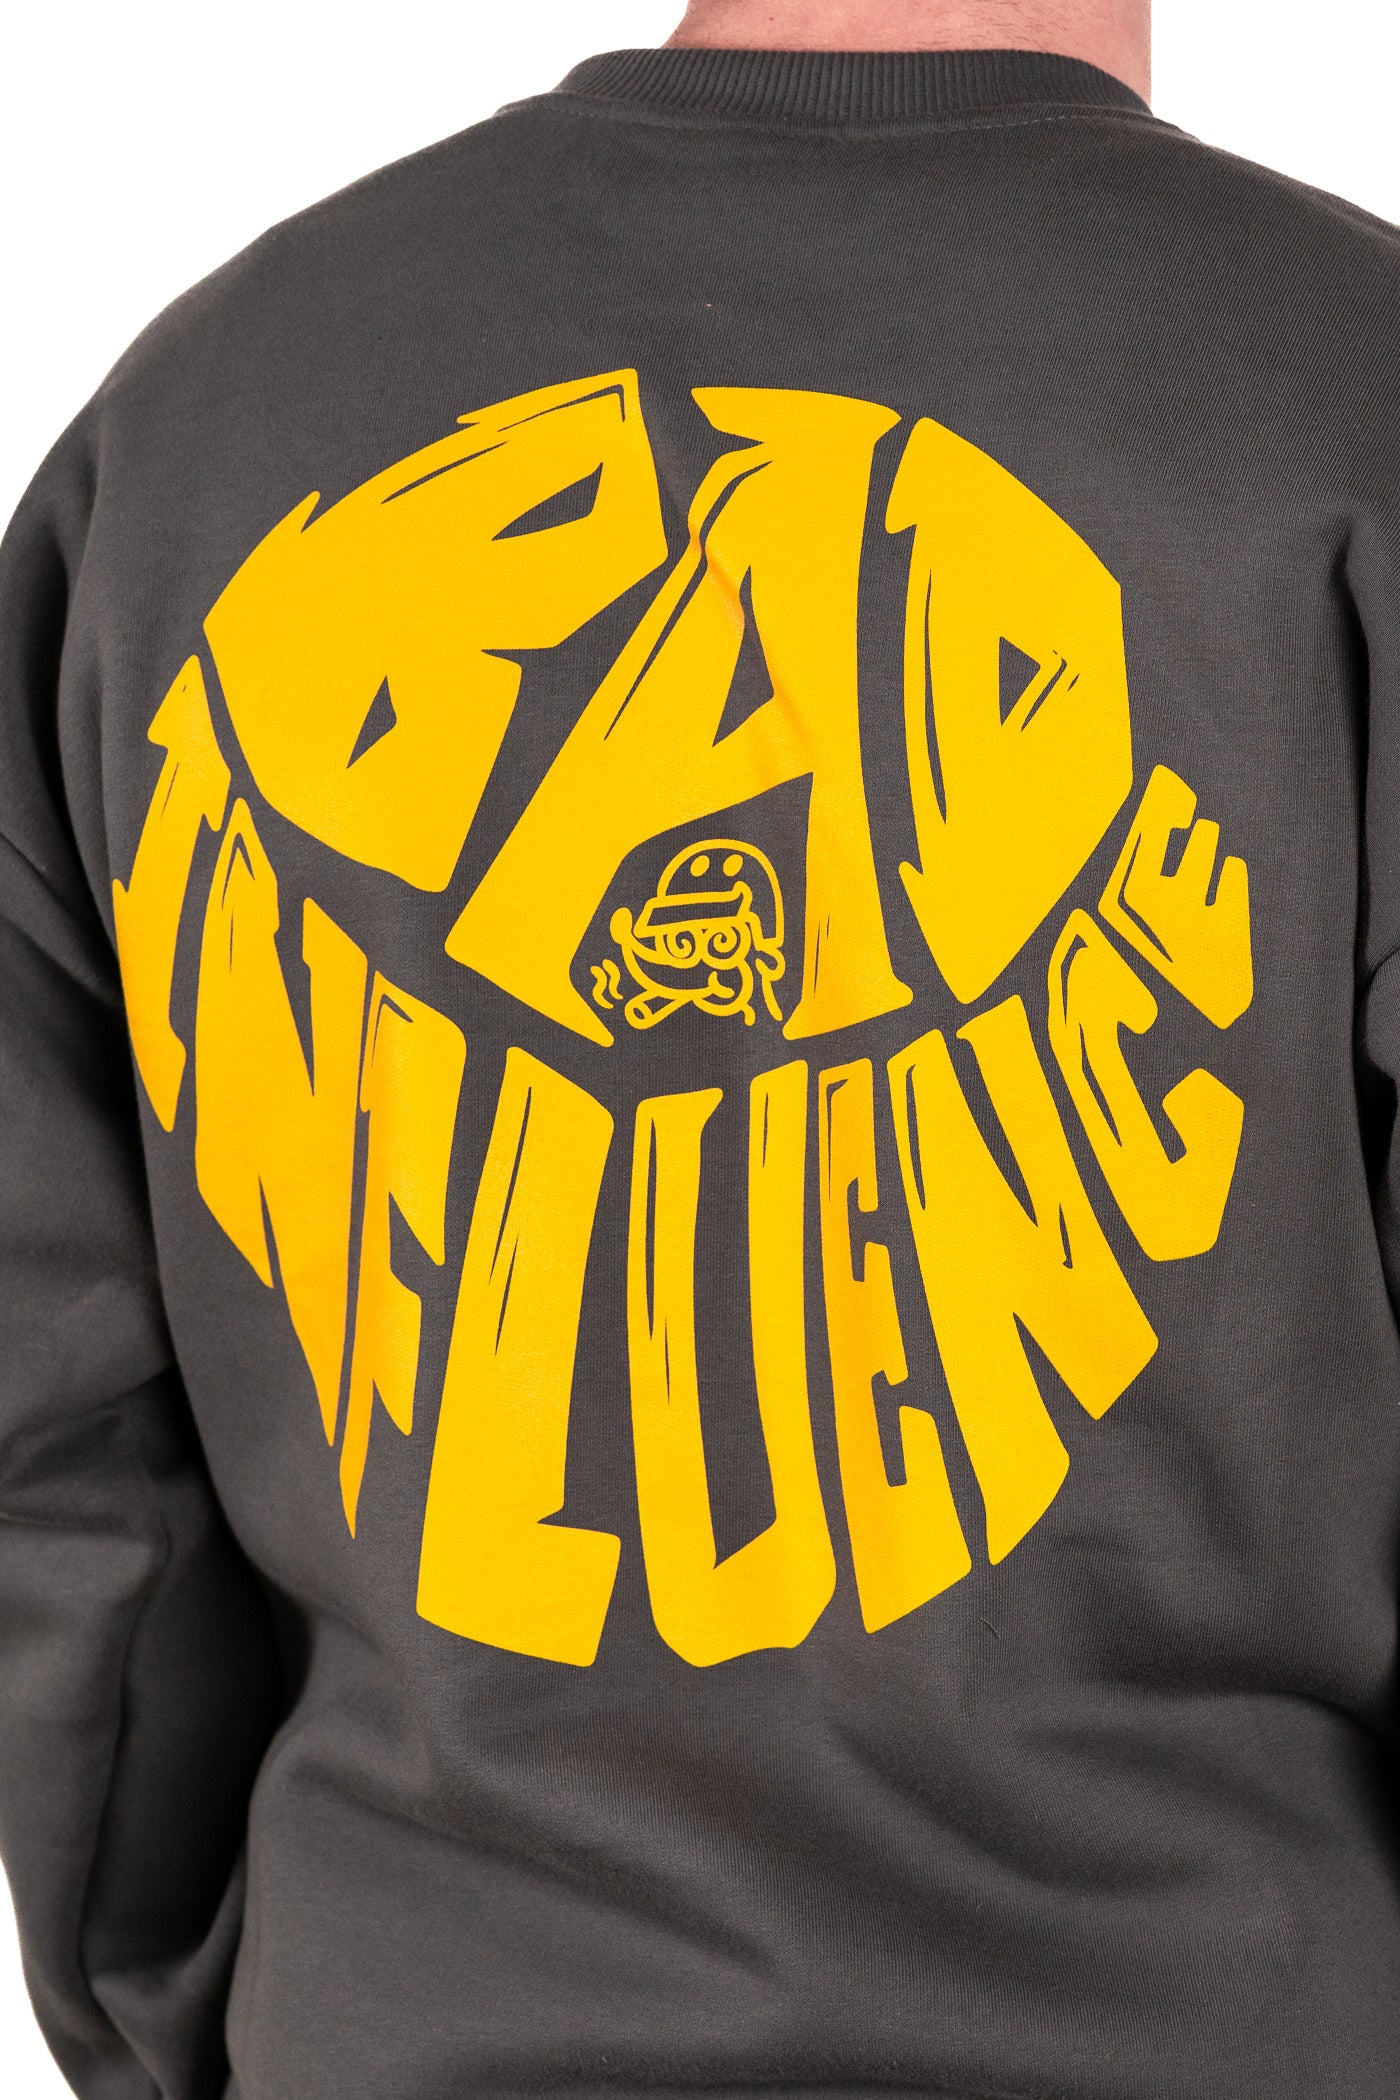 Sweatshirt Bad Influence Gray